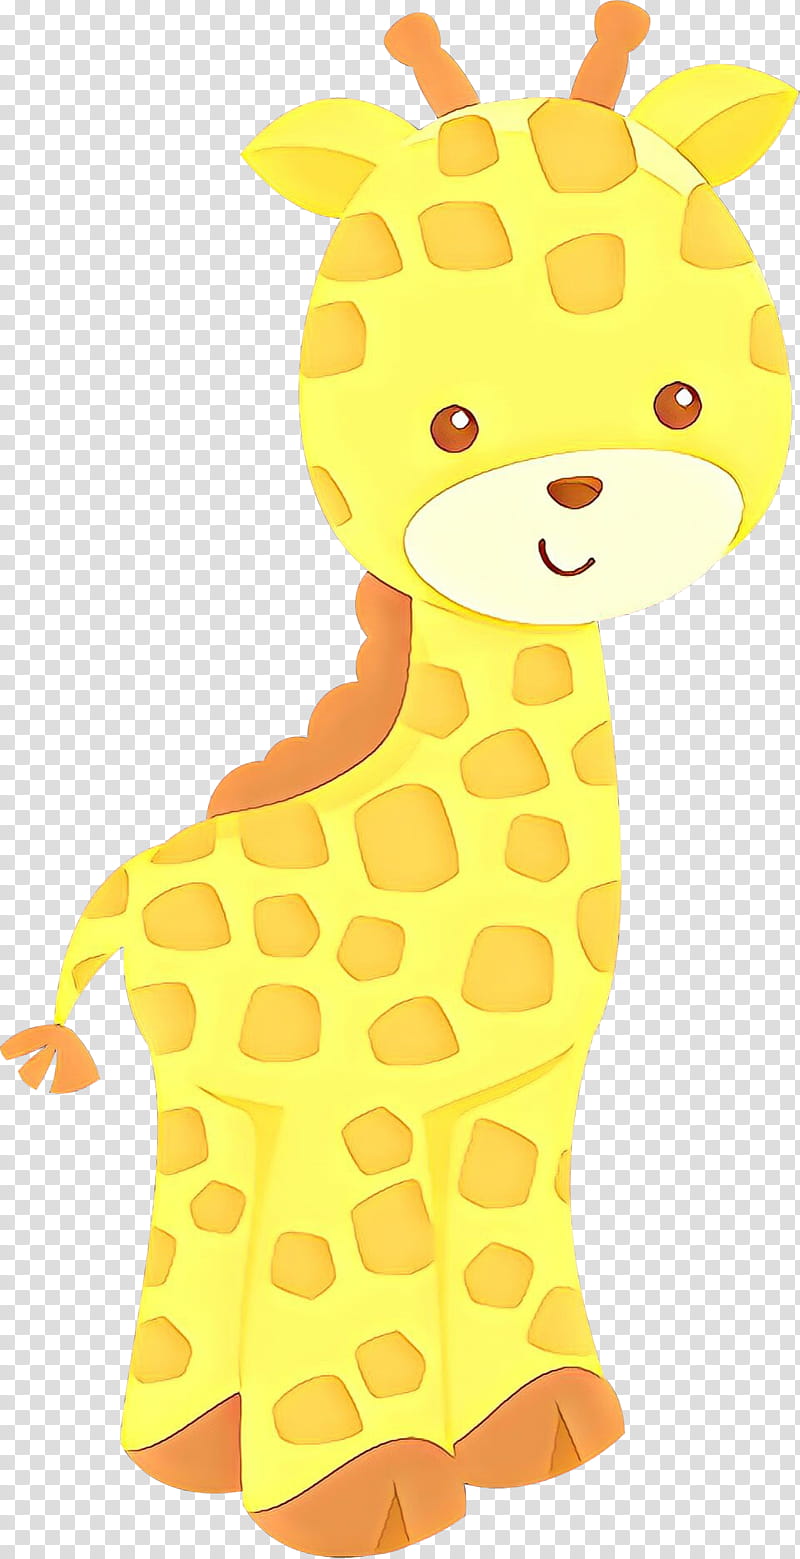 Giraffe, Cat, Character, Animal, Giraffidae, Yellow, Animal Figure, Polka Dot transparent background PNG clipart